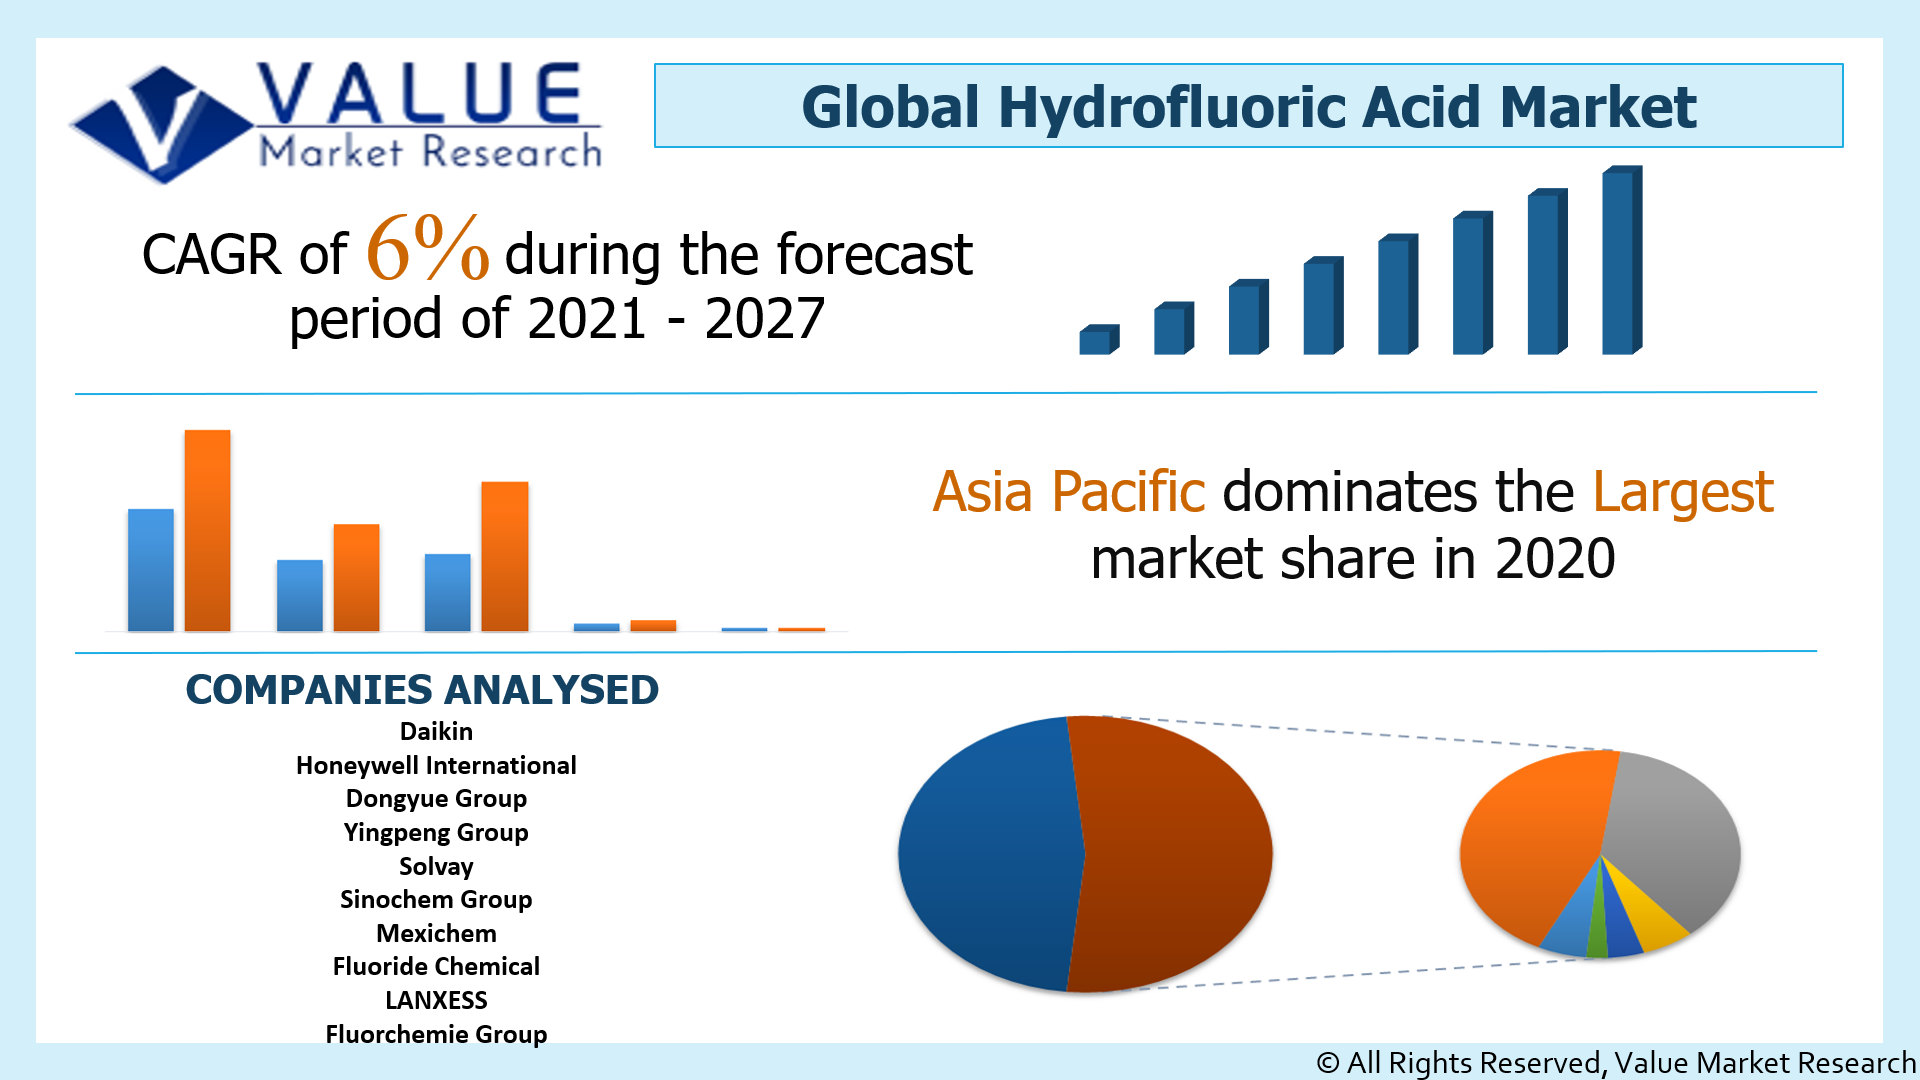 Global Hydrofluoric Acid Market Share